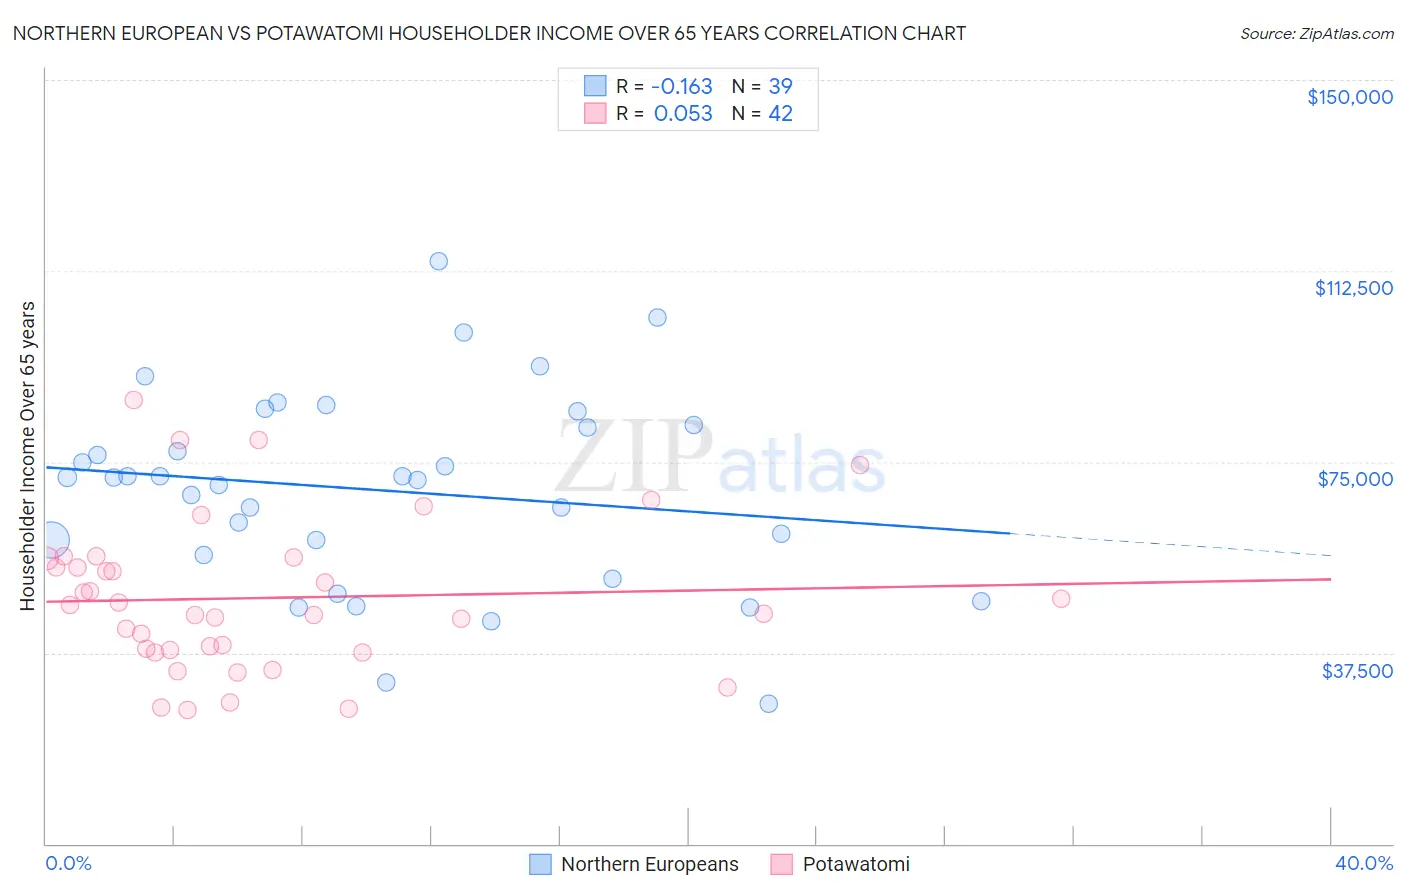 Northern European vs Potawatomi Householder Income Over 65 years